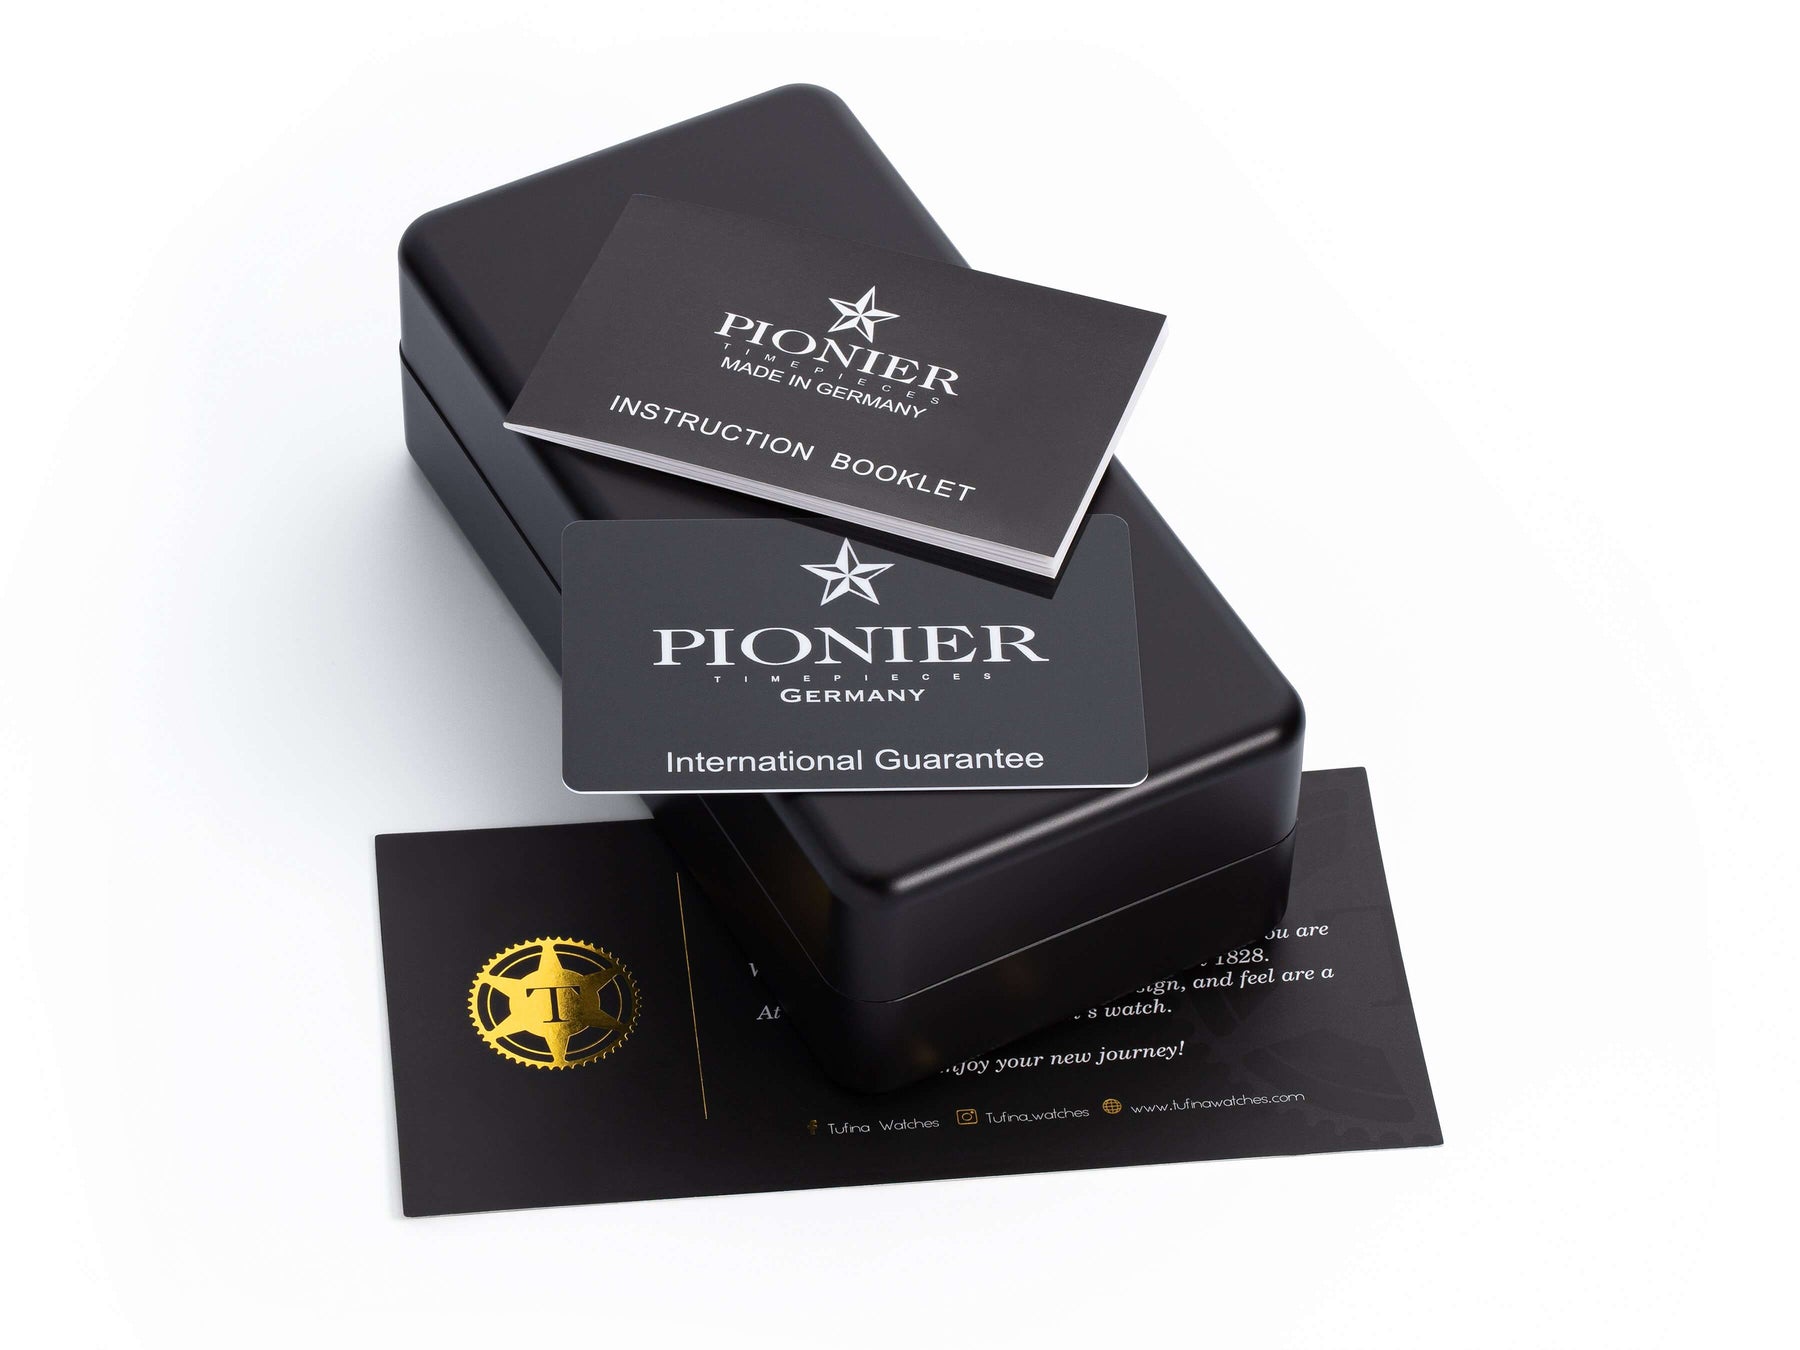 Pionier box, pionier booklet, pionier warranty and gift card